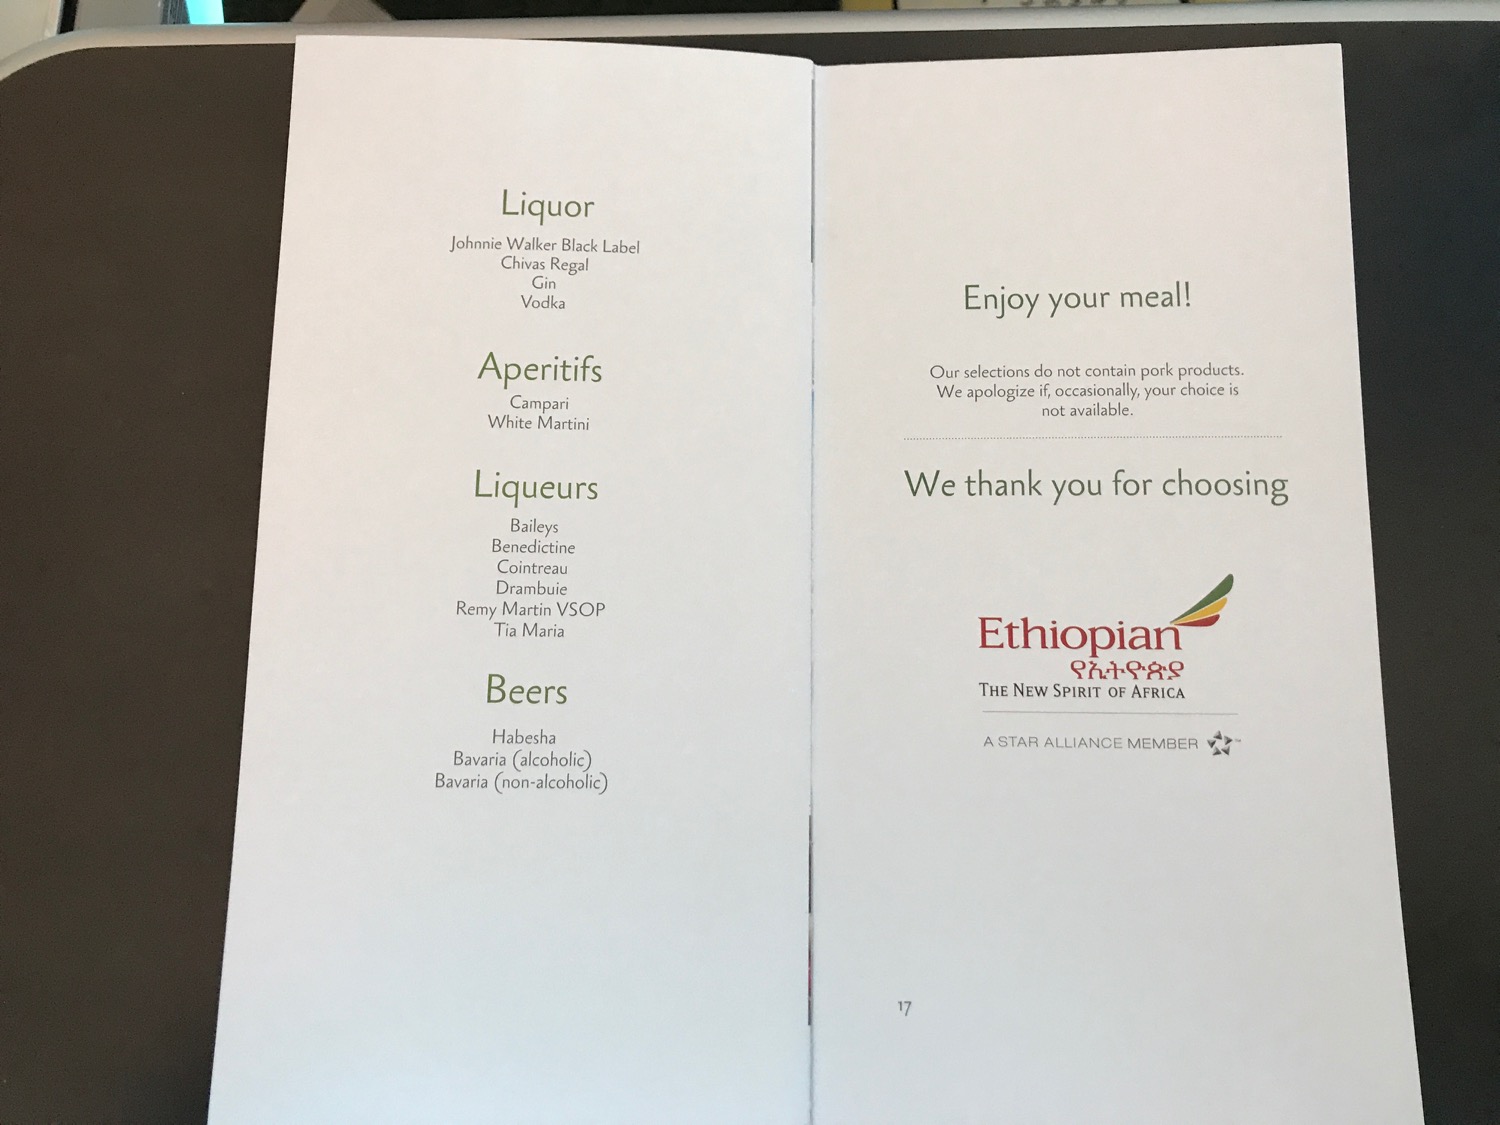 a menu open to show the menu